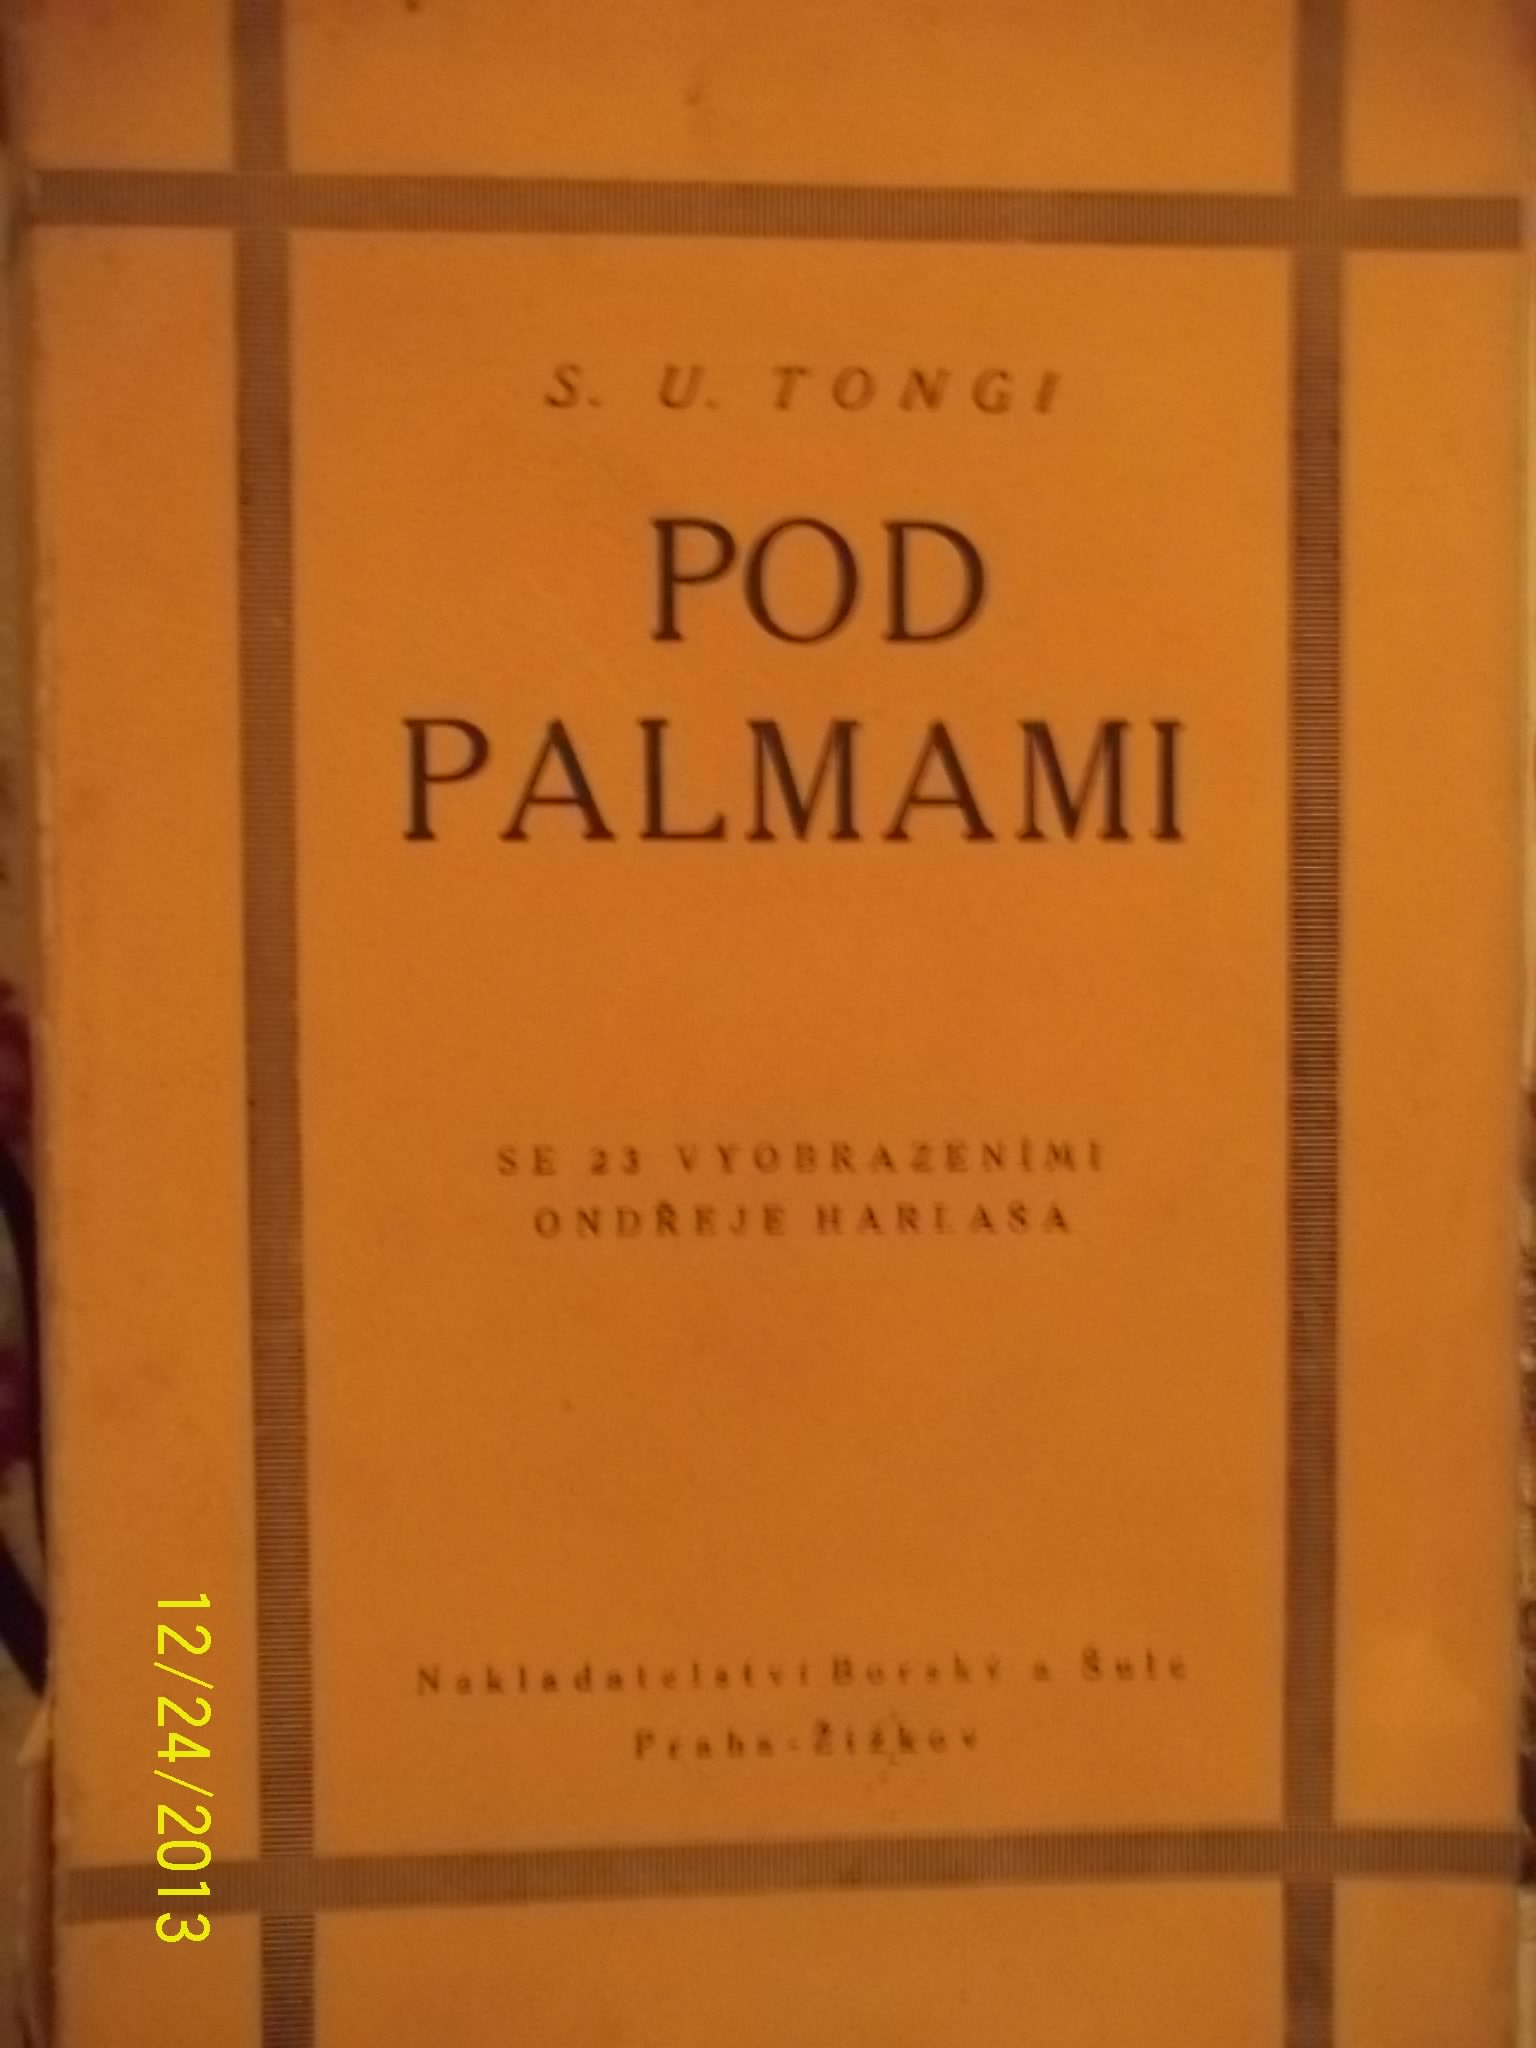 zobrazit detail knihy Tongi, S. U.: Pod palmami